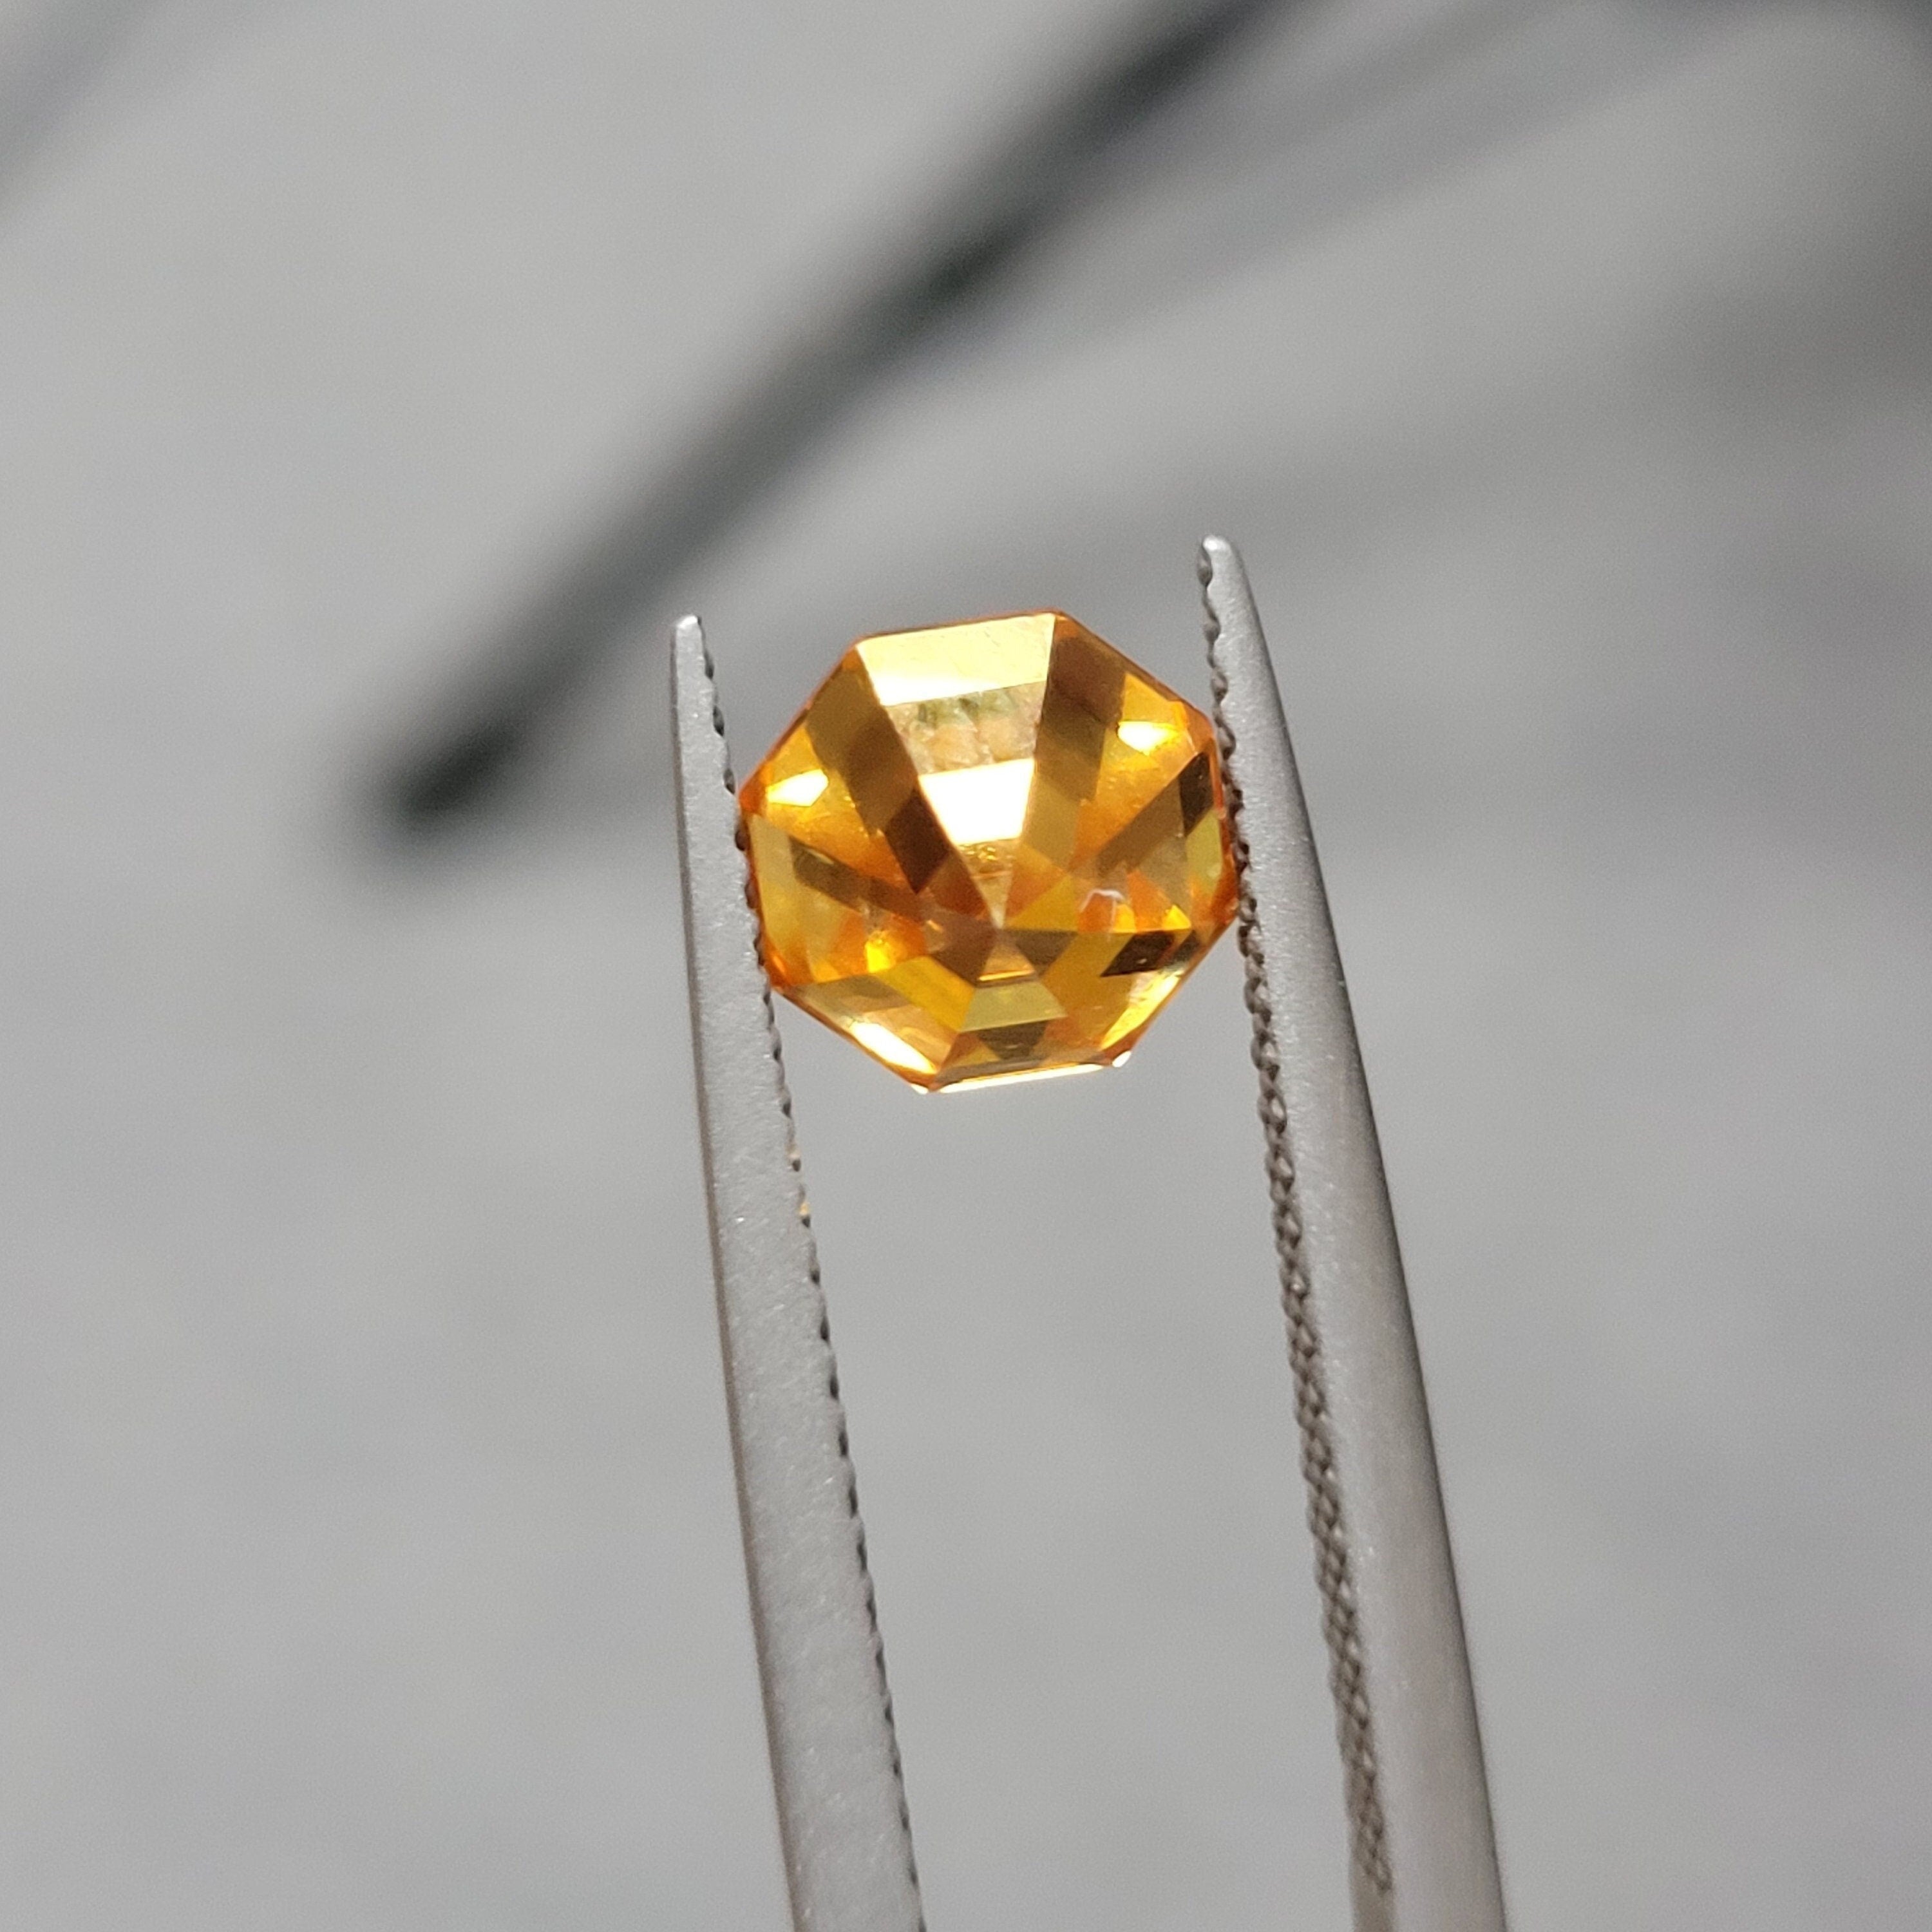 7mm 2ct loose moissanite certified vvs1 sweet orange octagon cut gra laboratory gemstone